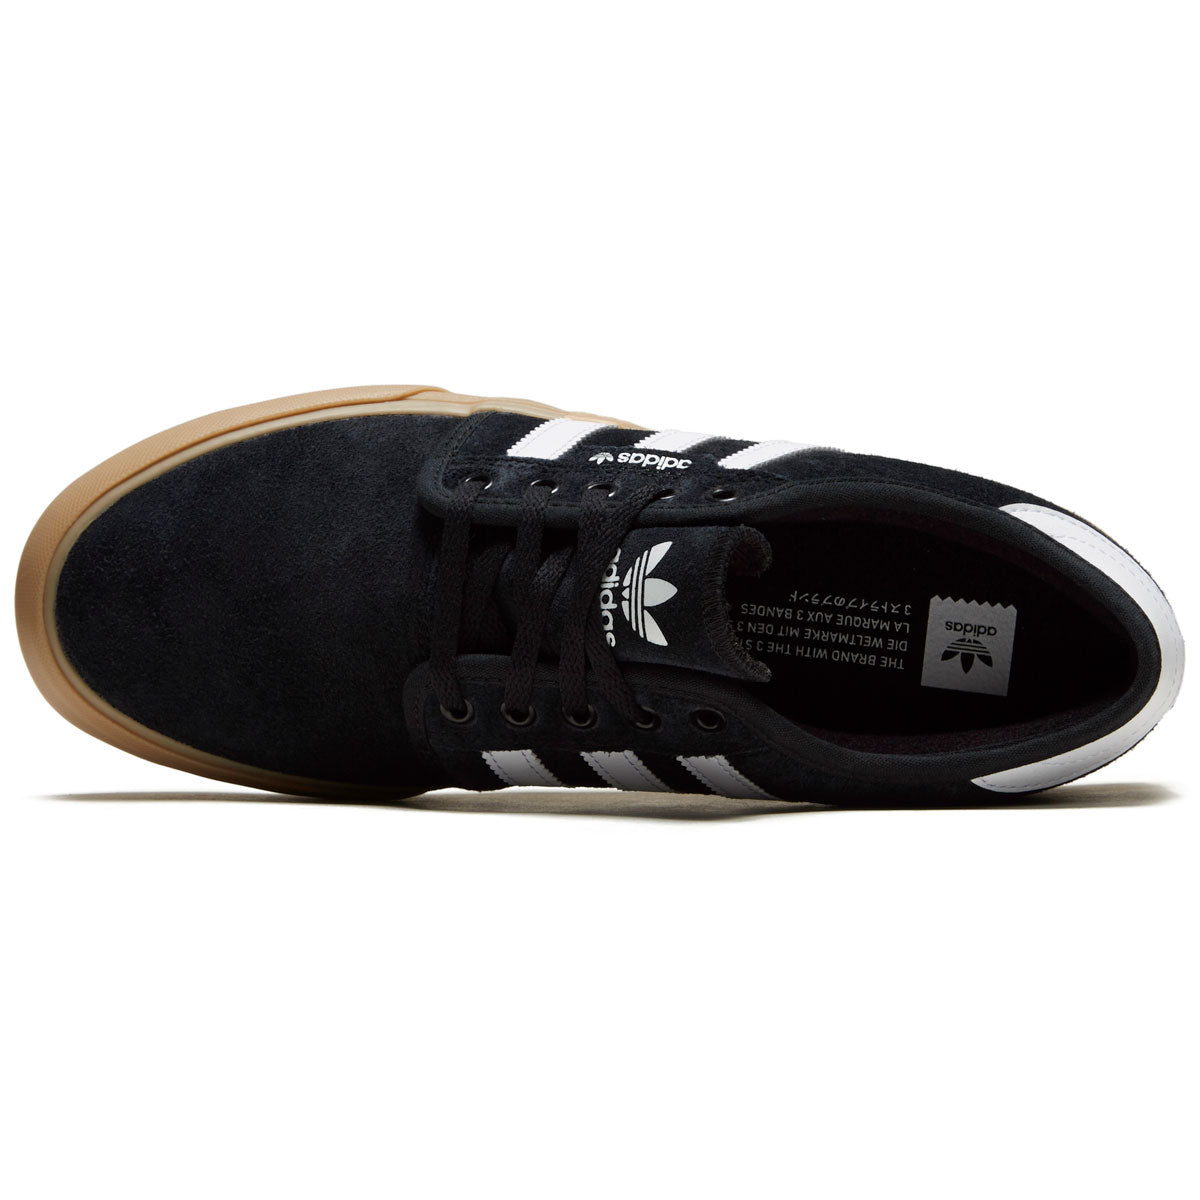 Adidas Seeley Xt Shoes - Black/White/Gum image 3